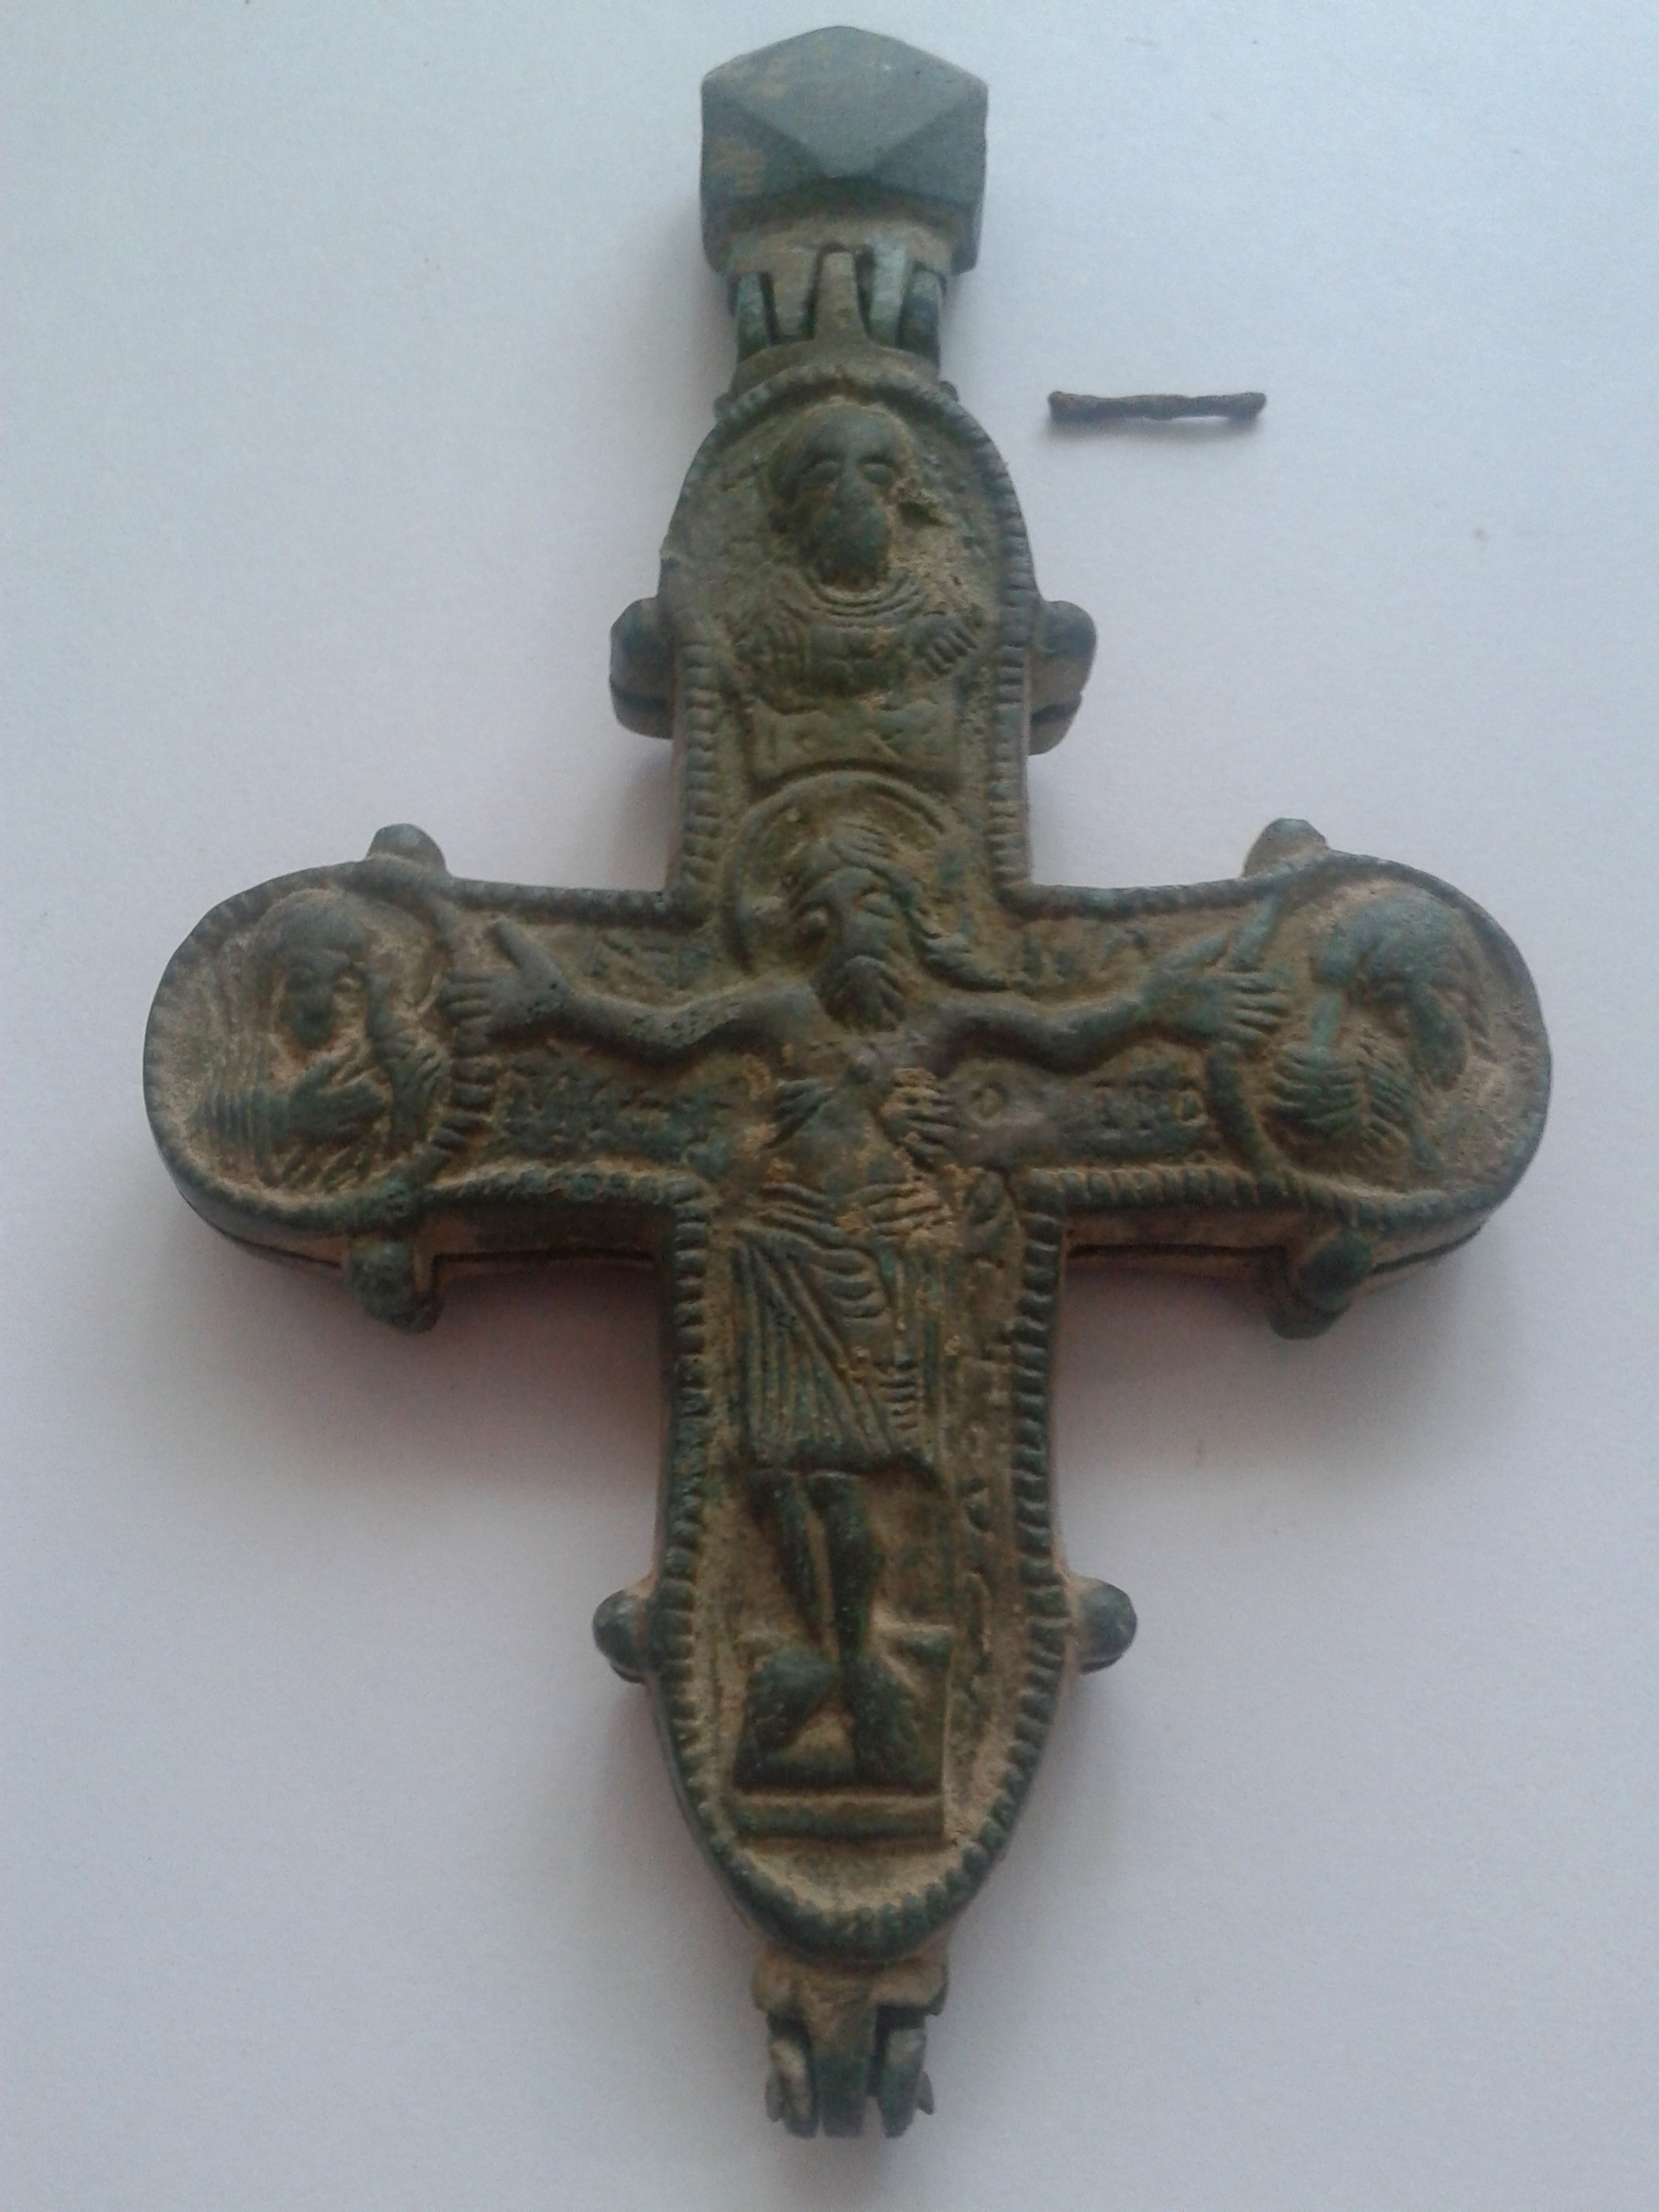 Double cross reliquary of Century XII - XIII